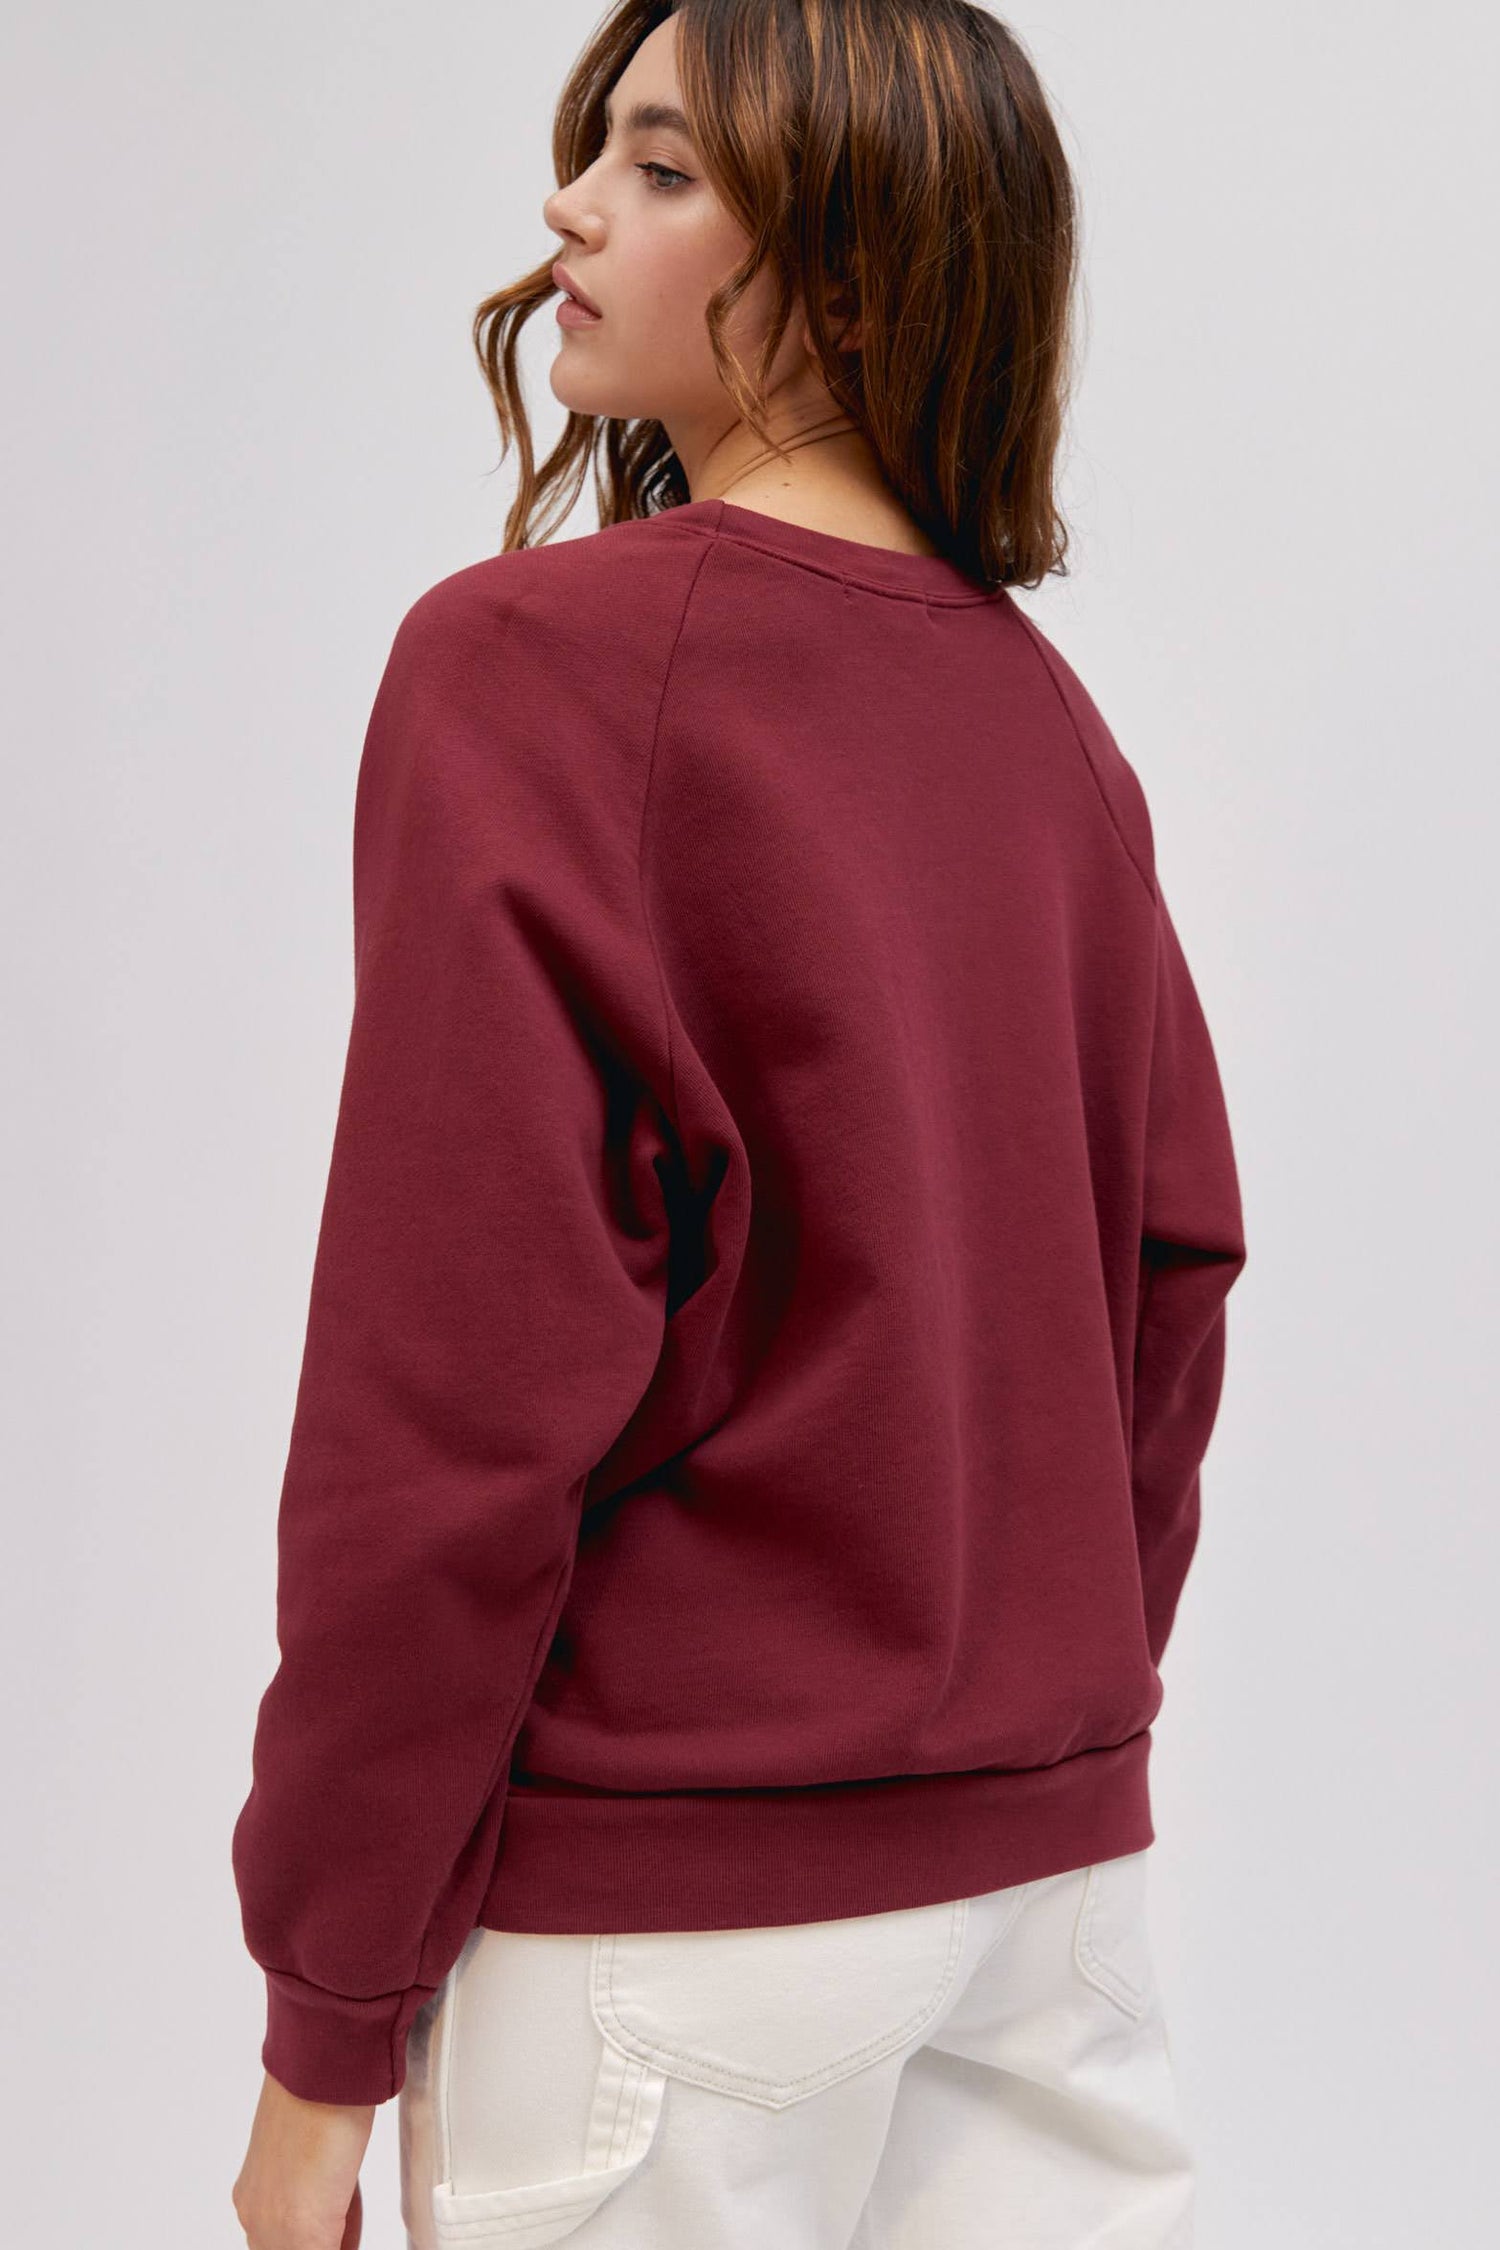 backside of long wavy haired model wearing maroon colored sweatshirt